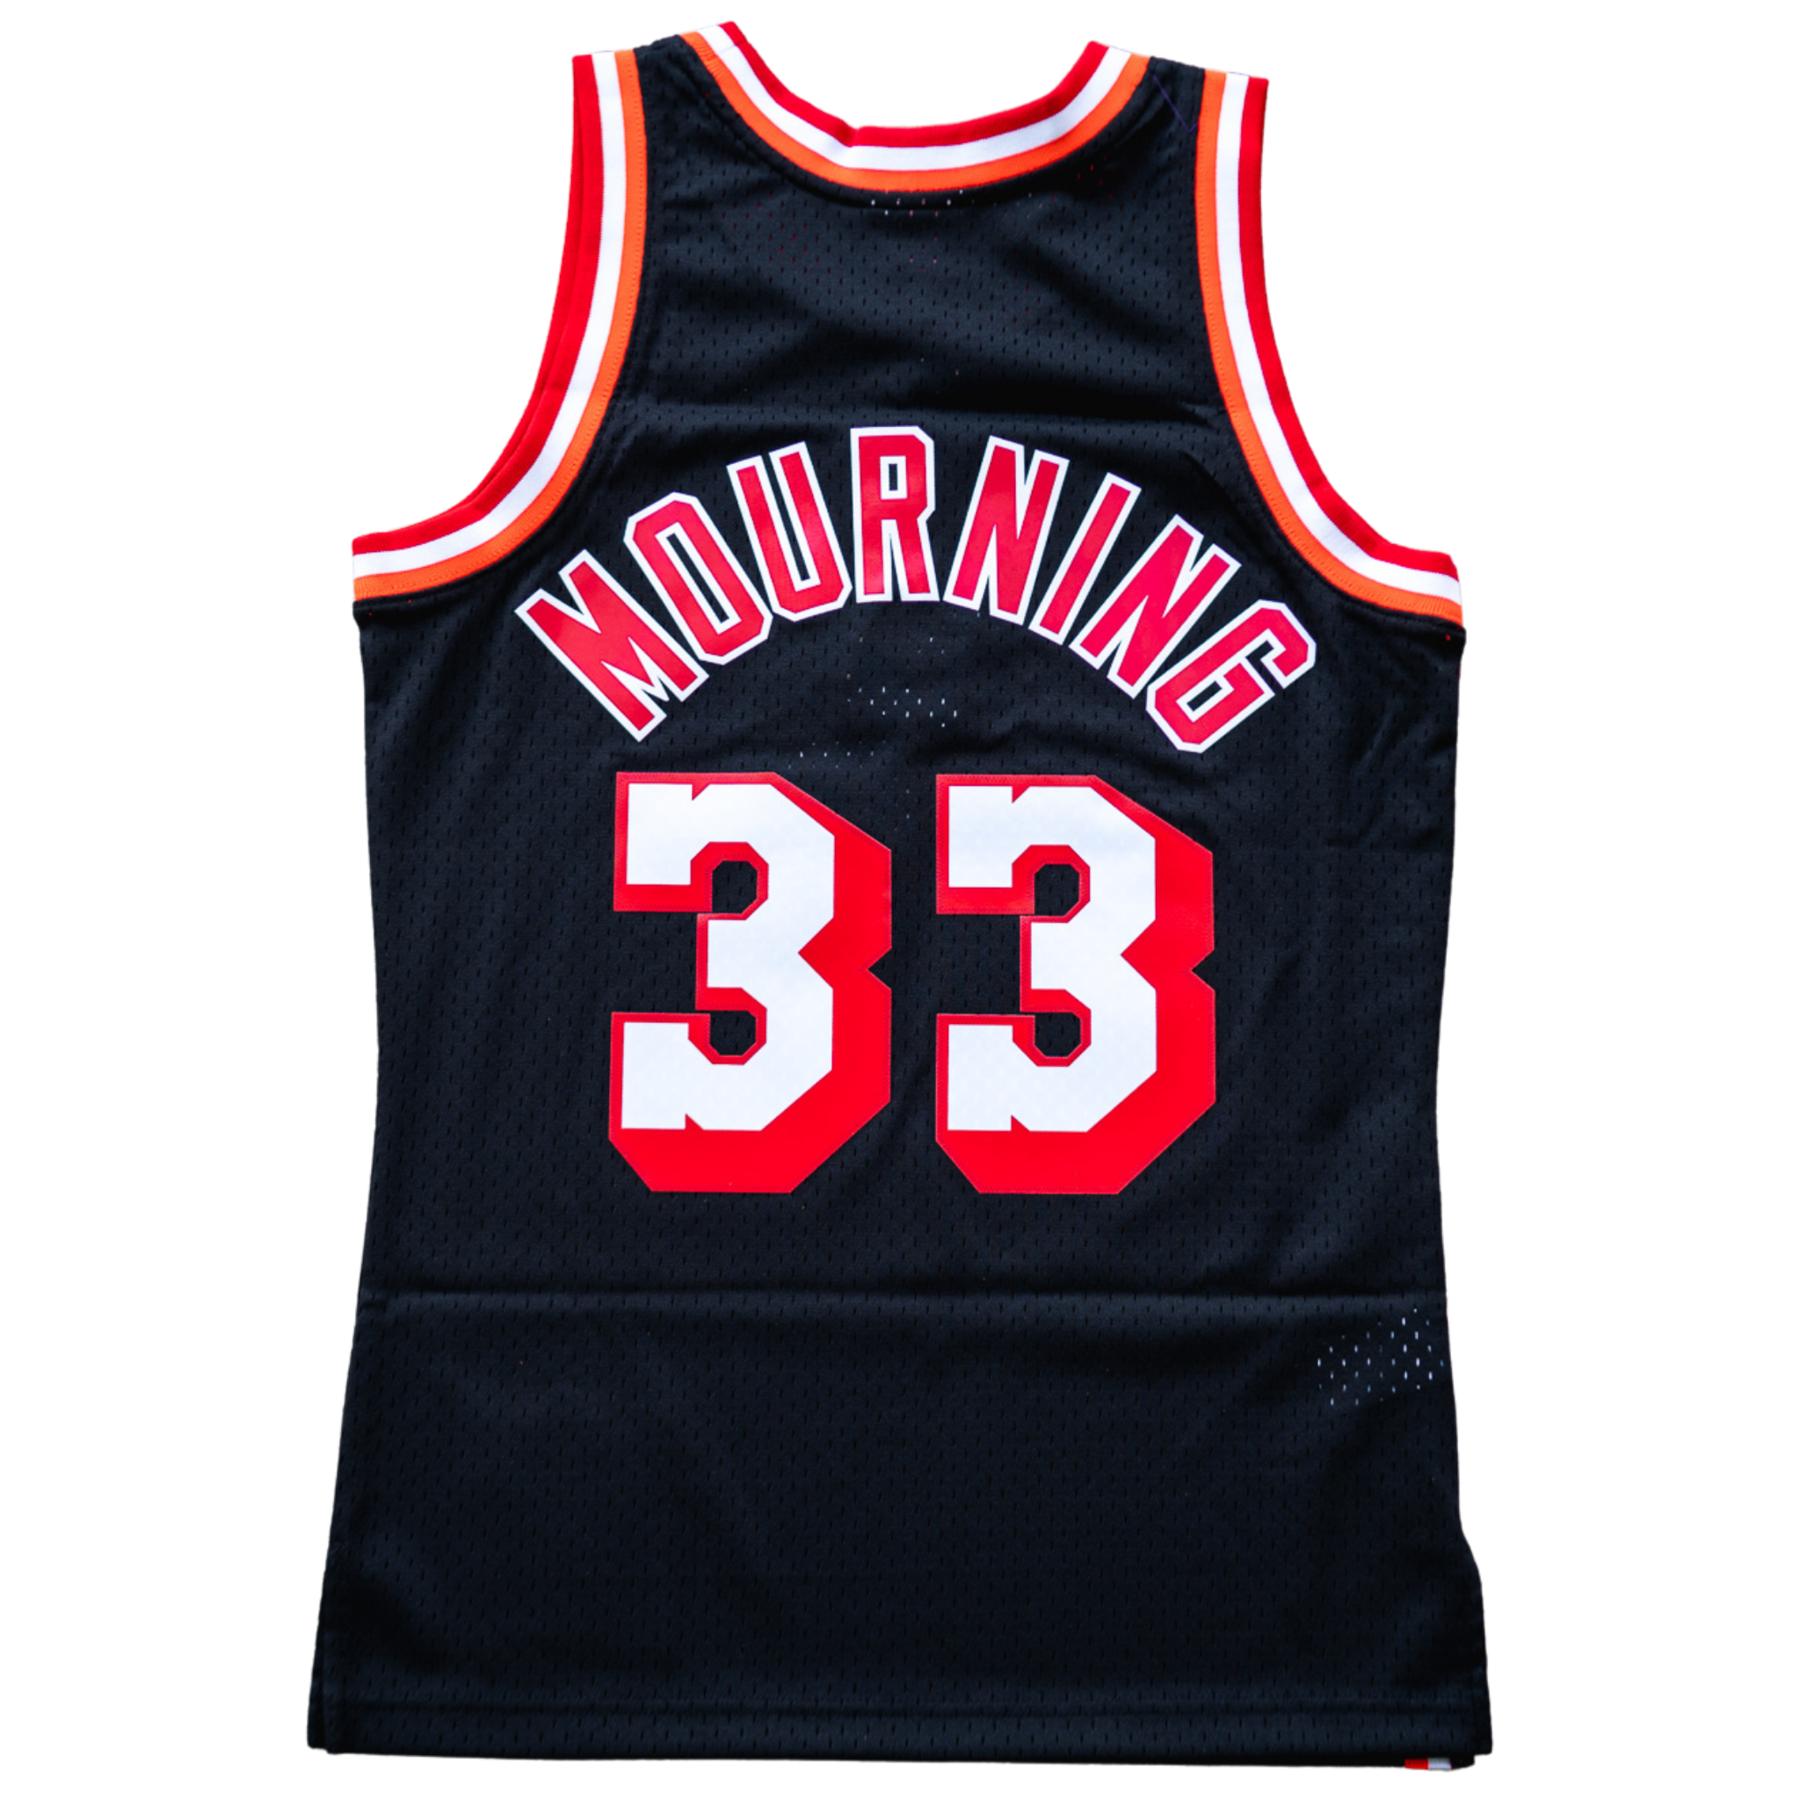 Heat Number 33 Basketball Jersey